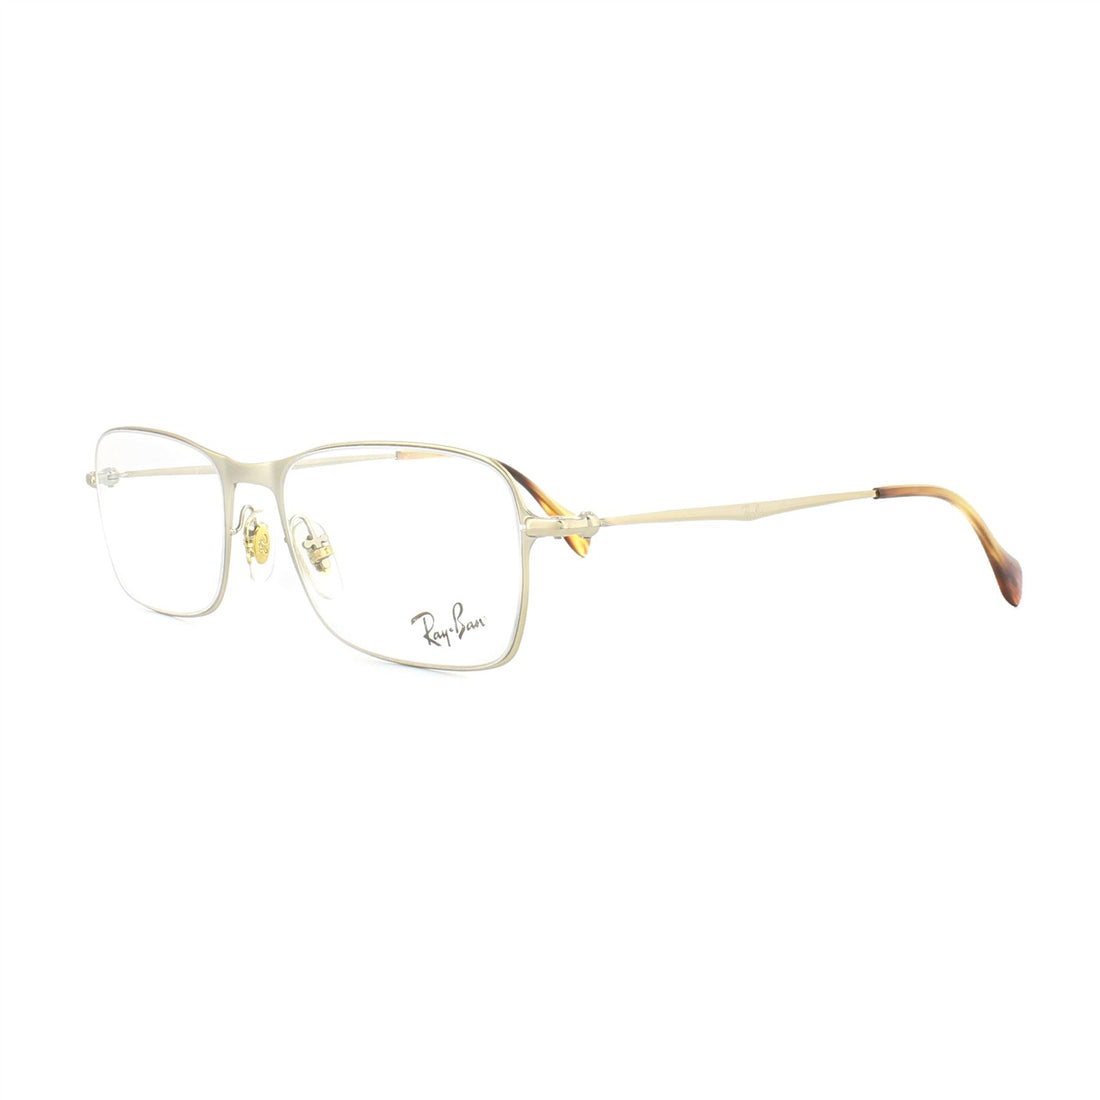 Ray-Ban 6253 Glasses Frames